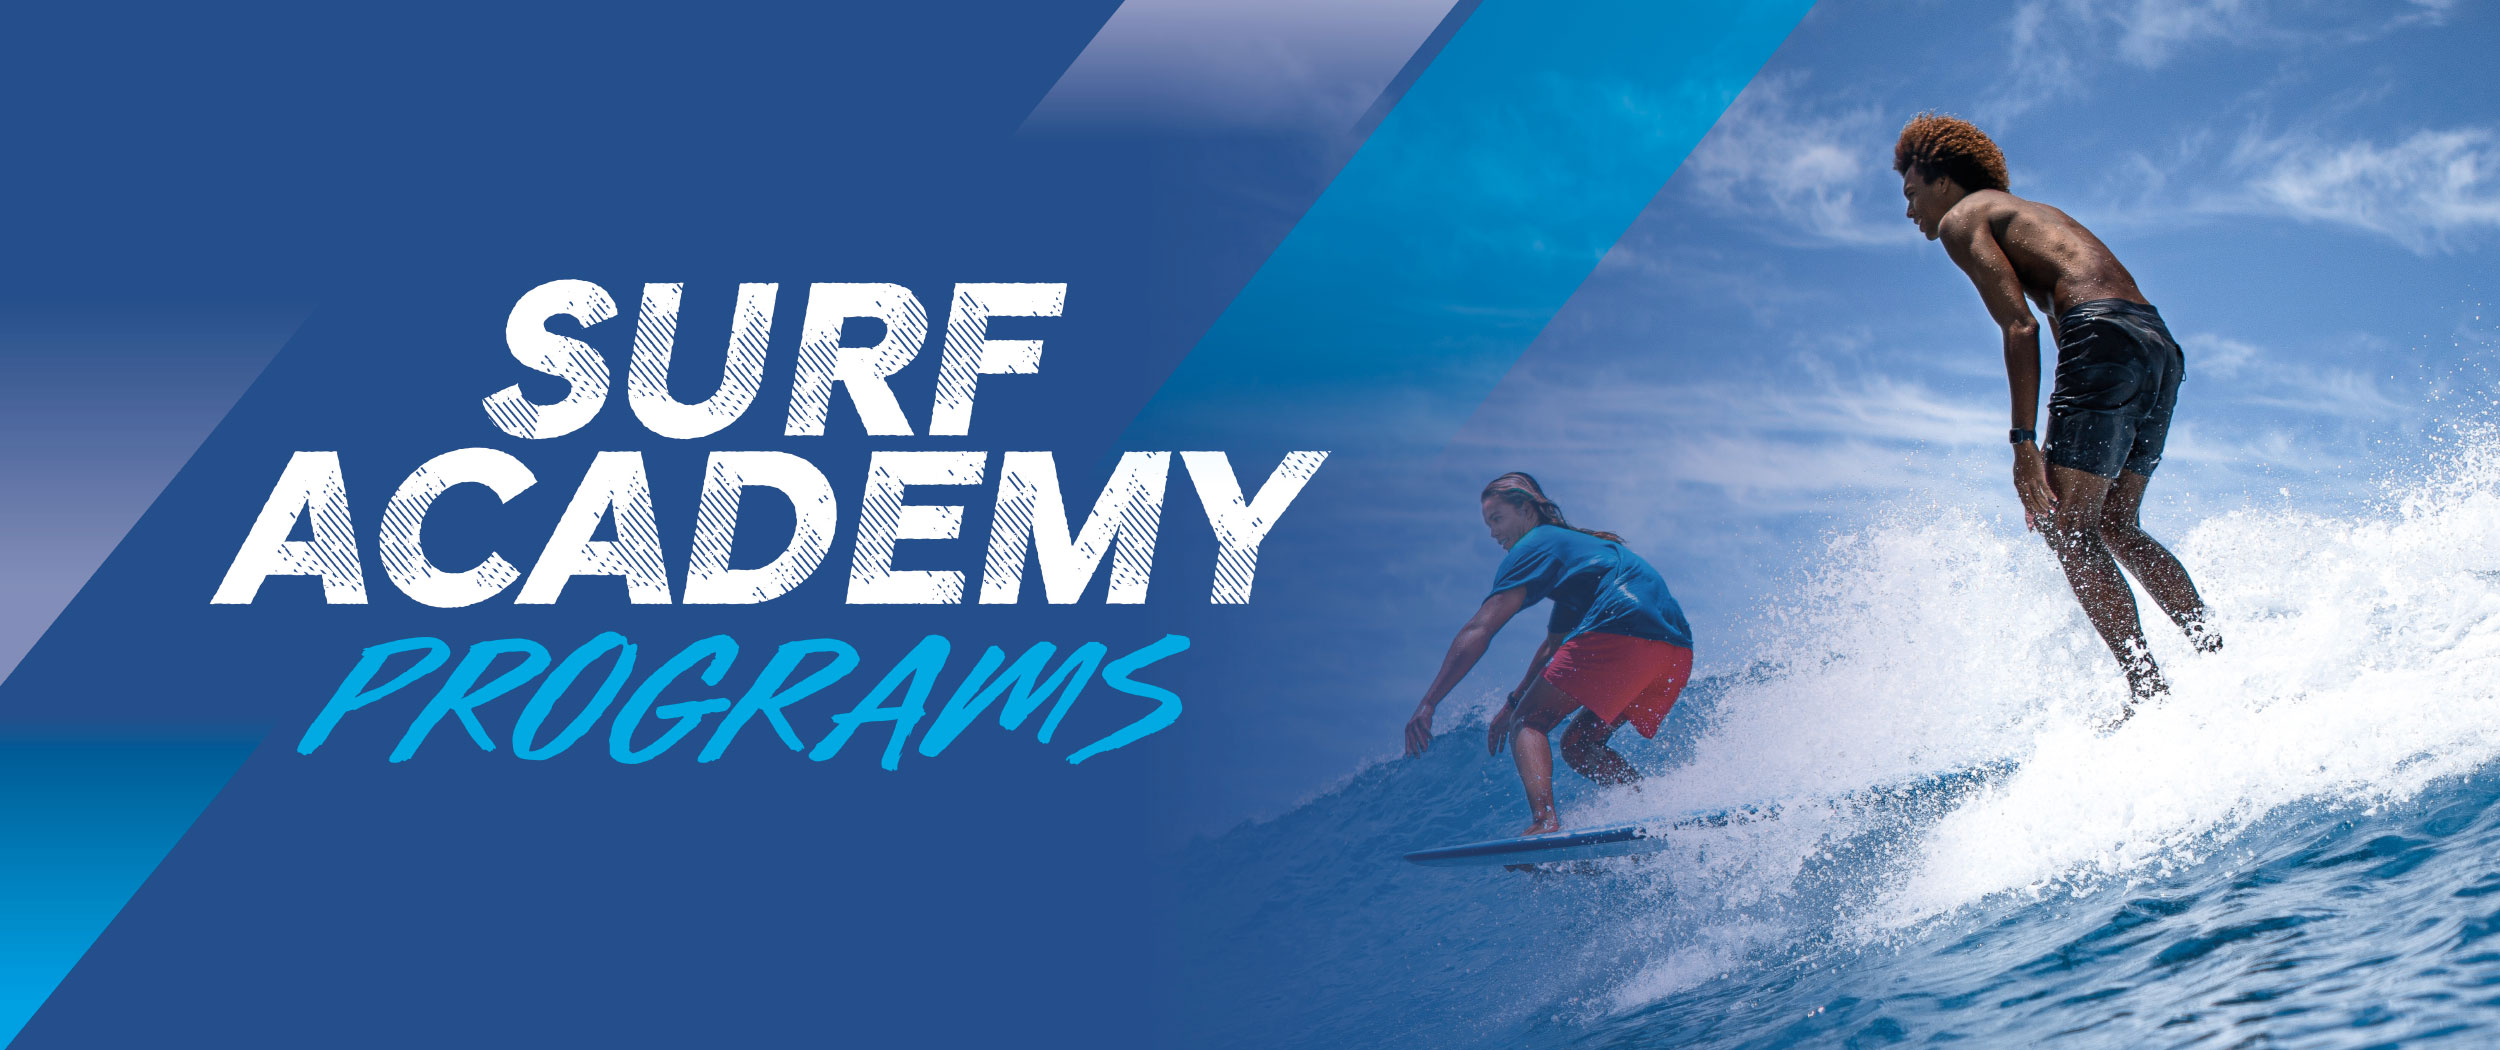 Surf Academy Programs